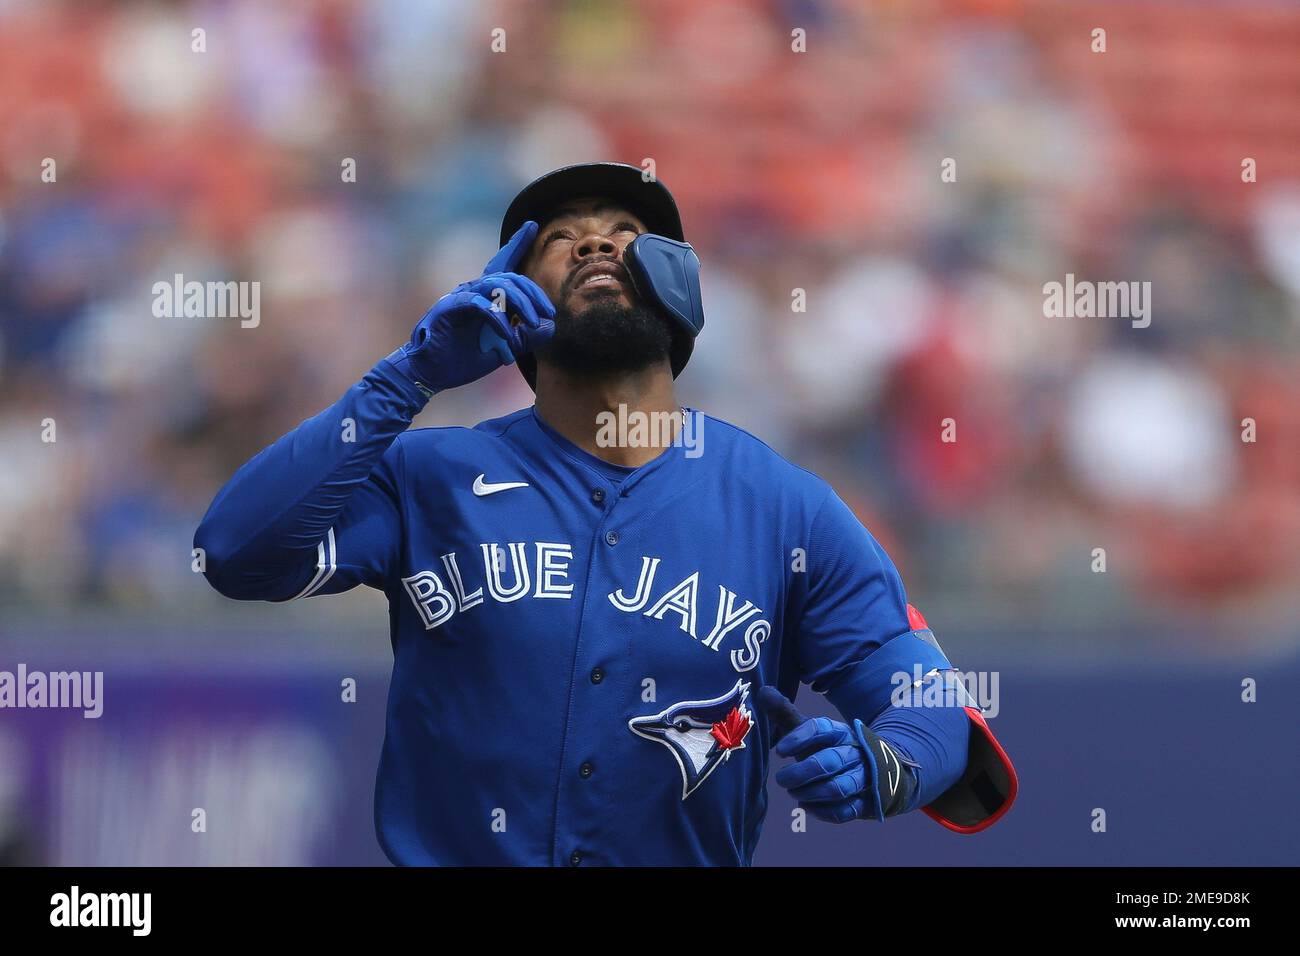 Toronto Blue Jays' Teoscar Hernandez celebrates hitting a home run